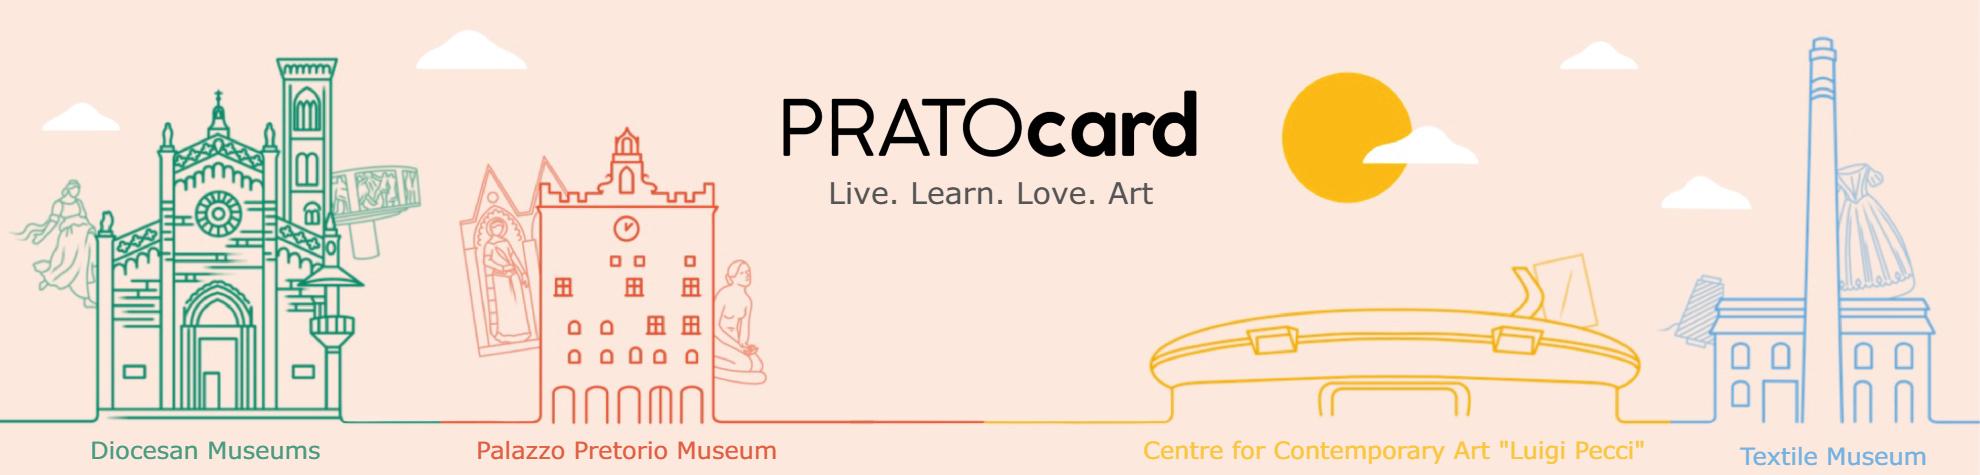 pratocard-english-edited1